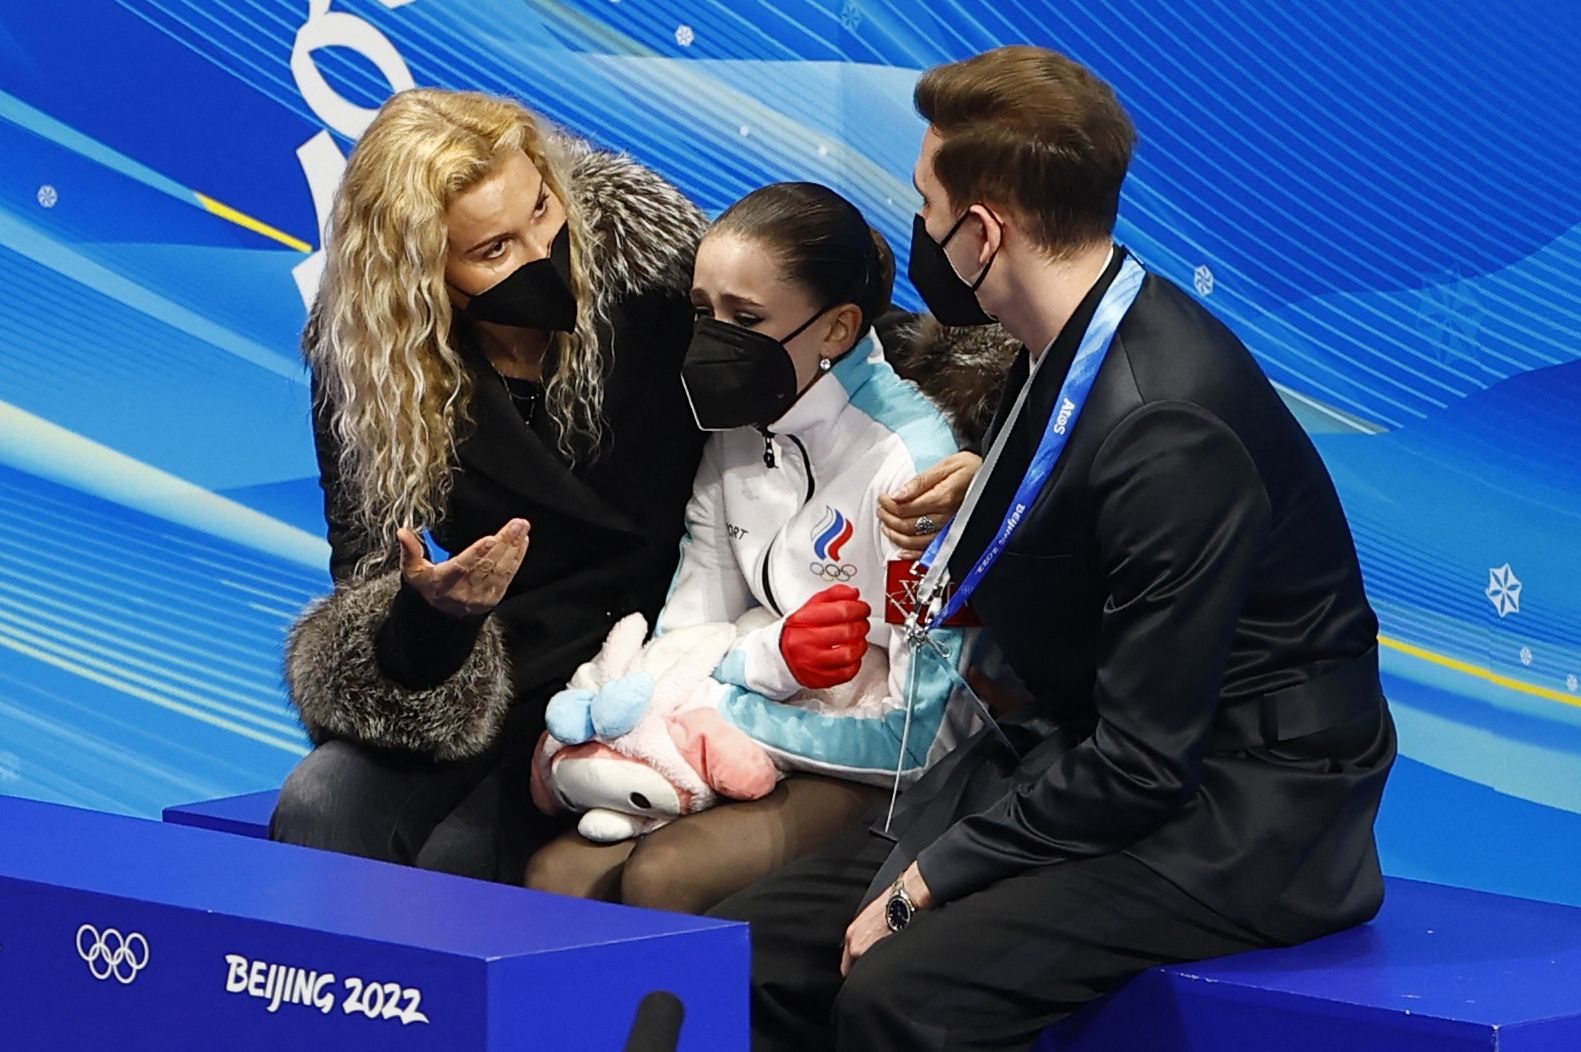 eijing, China - February 17, 2022. Kamila Valieva of the Russian Olympic Committee reacts with coaches Daniil Gleikhengauz and Eteri Tutberidze after her performance. 